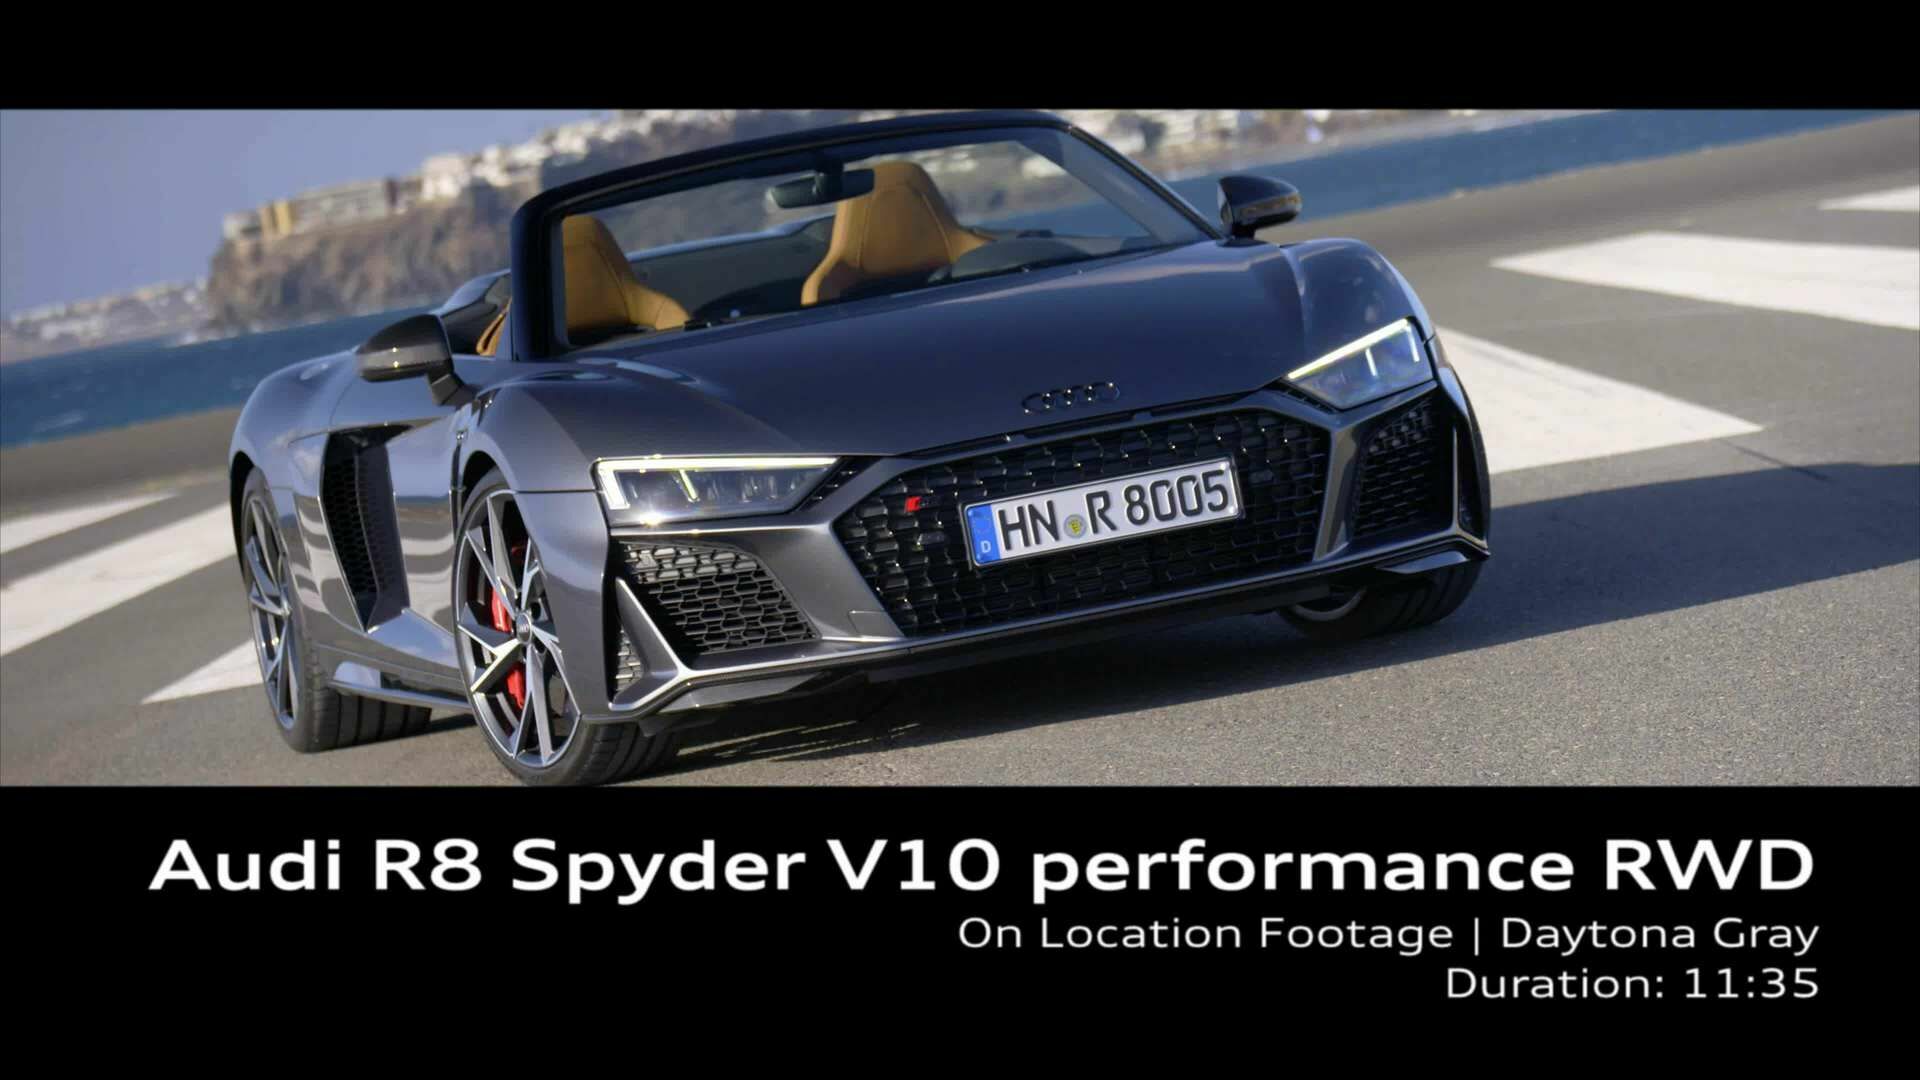 Footage: Audi R8 Spyder V10 performance RWD in Daytona Gray